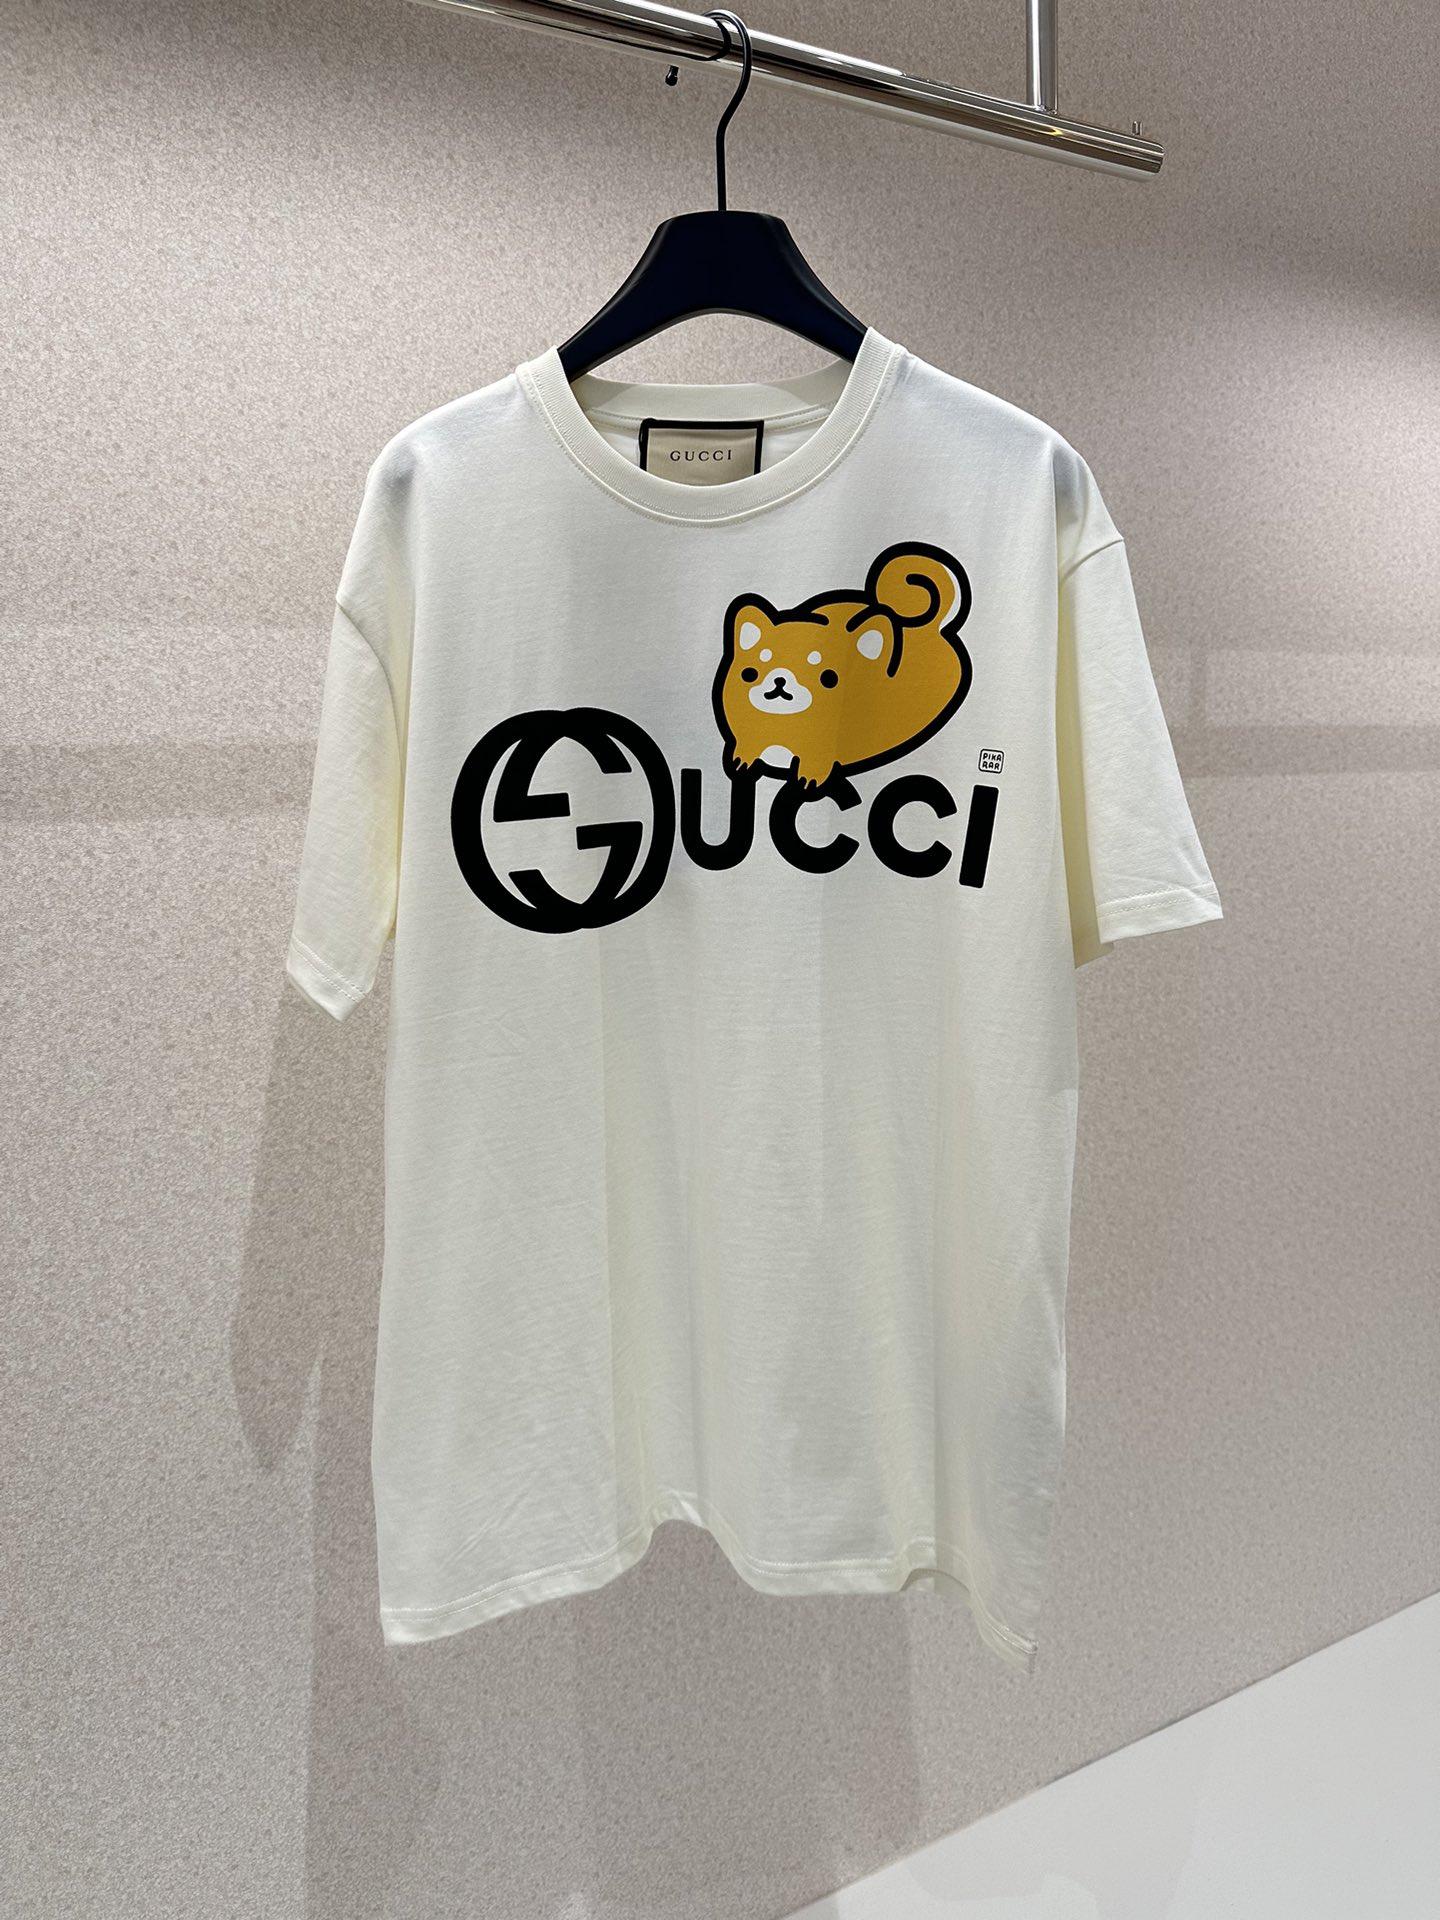 gucci-animal-print-cotton-t-shirt-7220_16845021102-1000